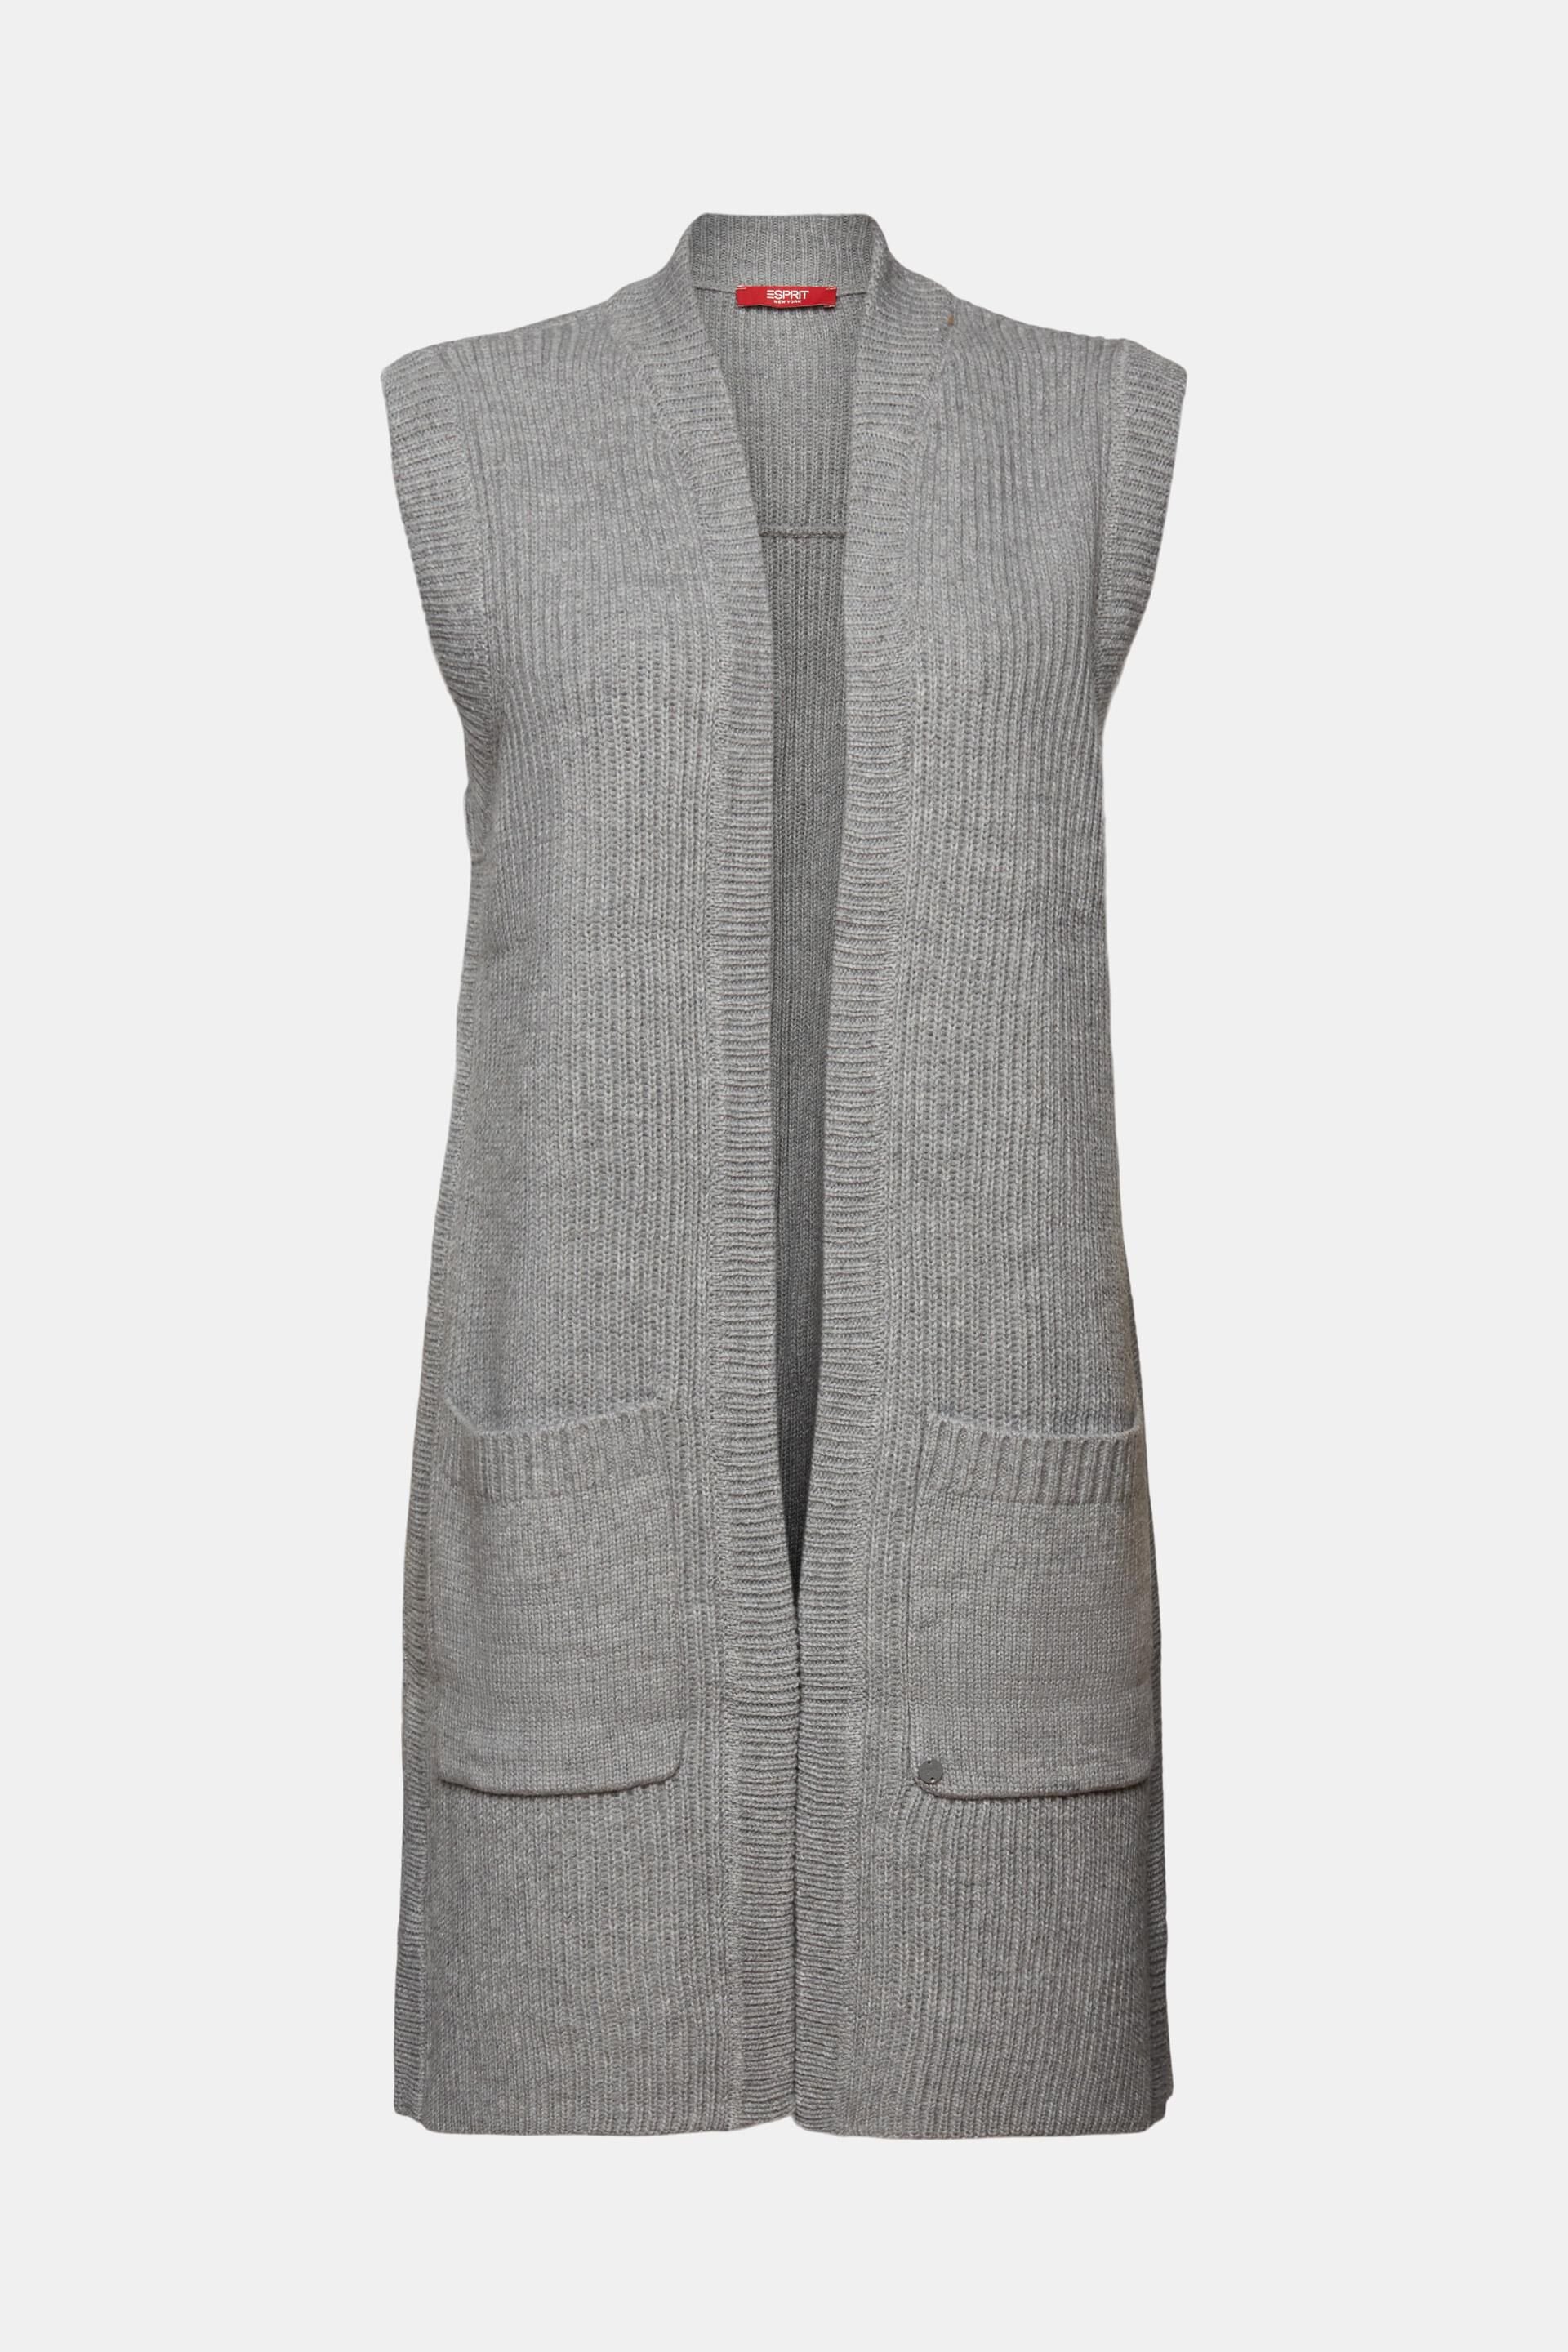 Esprit cardigan Recycled: longline sleeveless